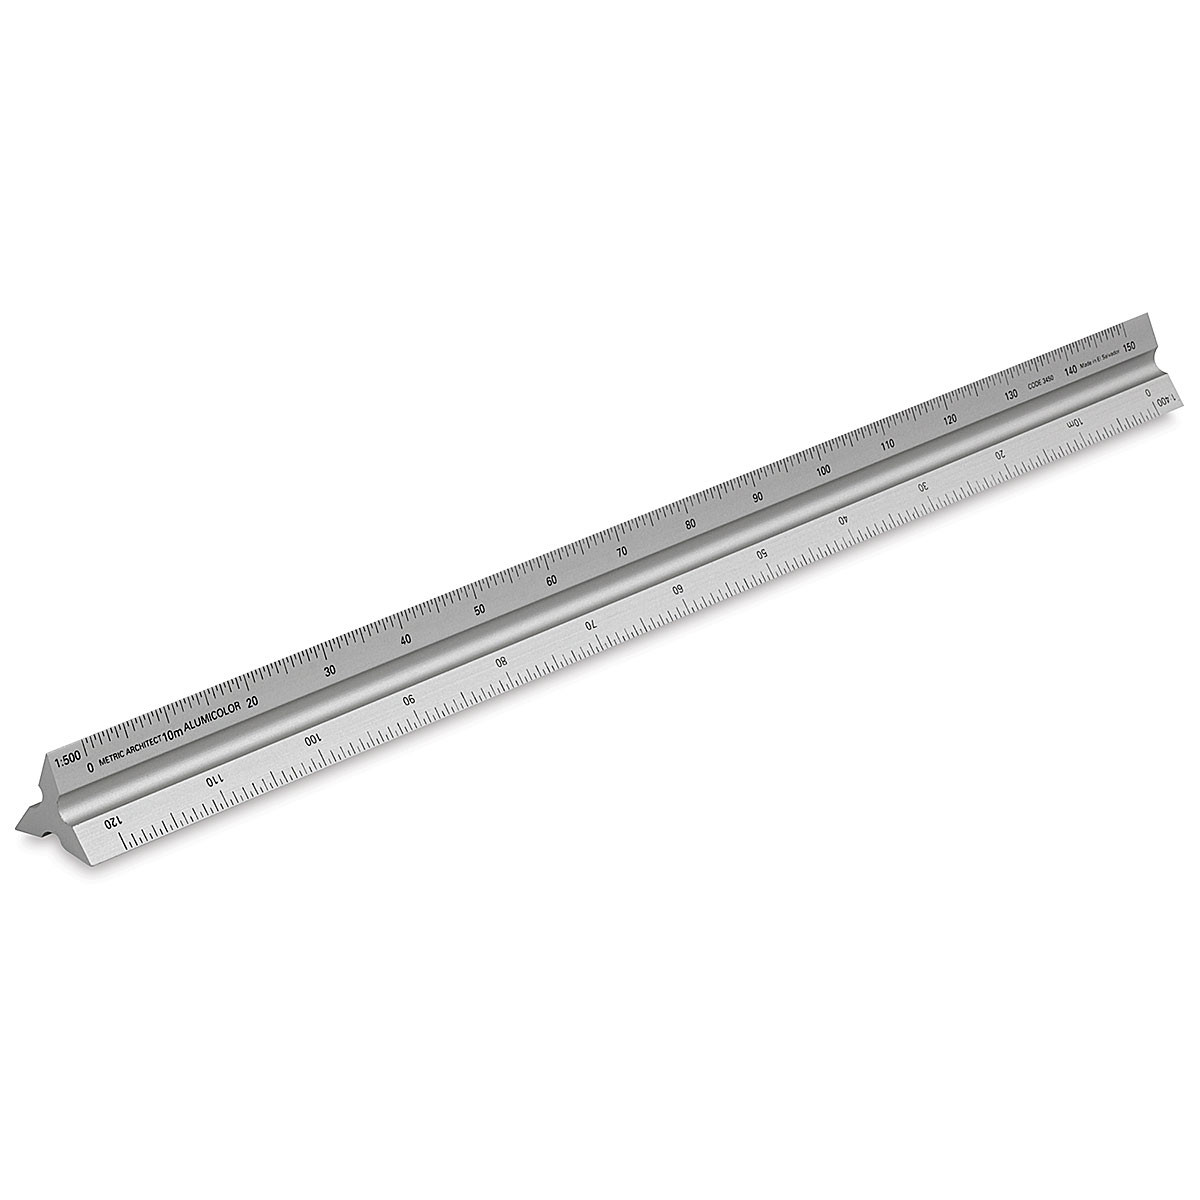 Ocm Metric Triangular Engineer Scale Ruler (Professional Grade Solid Aluminum) 30cm Metric